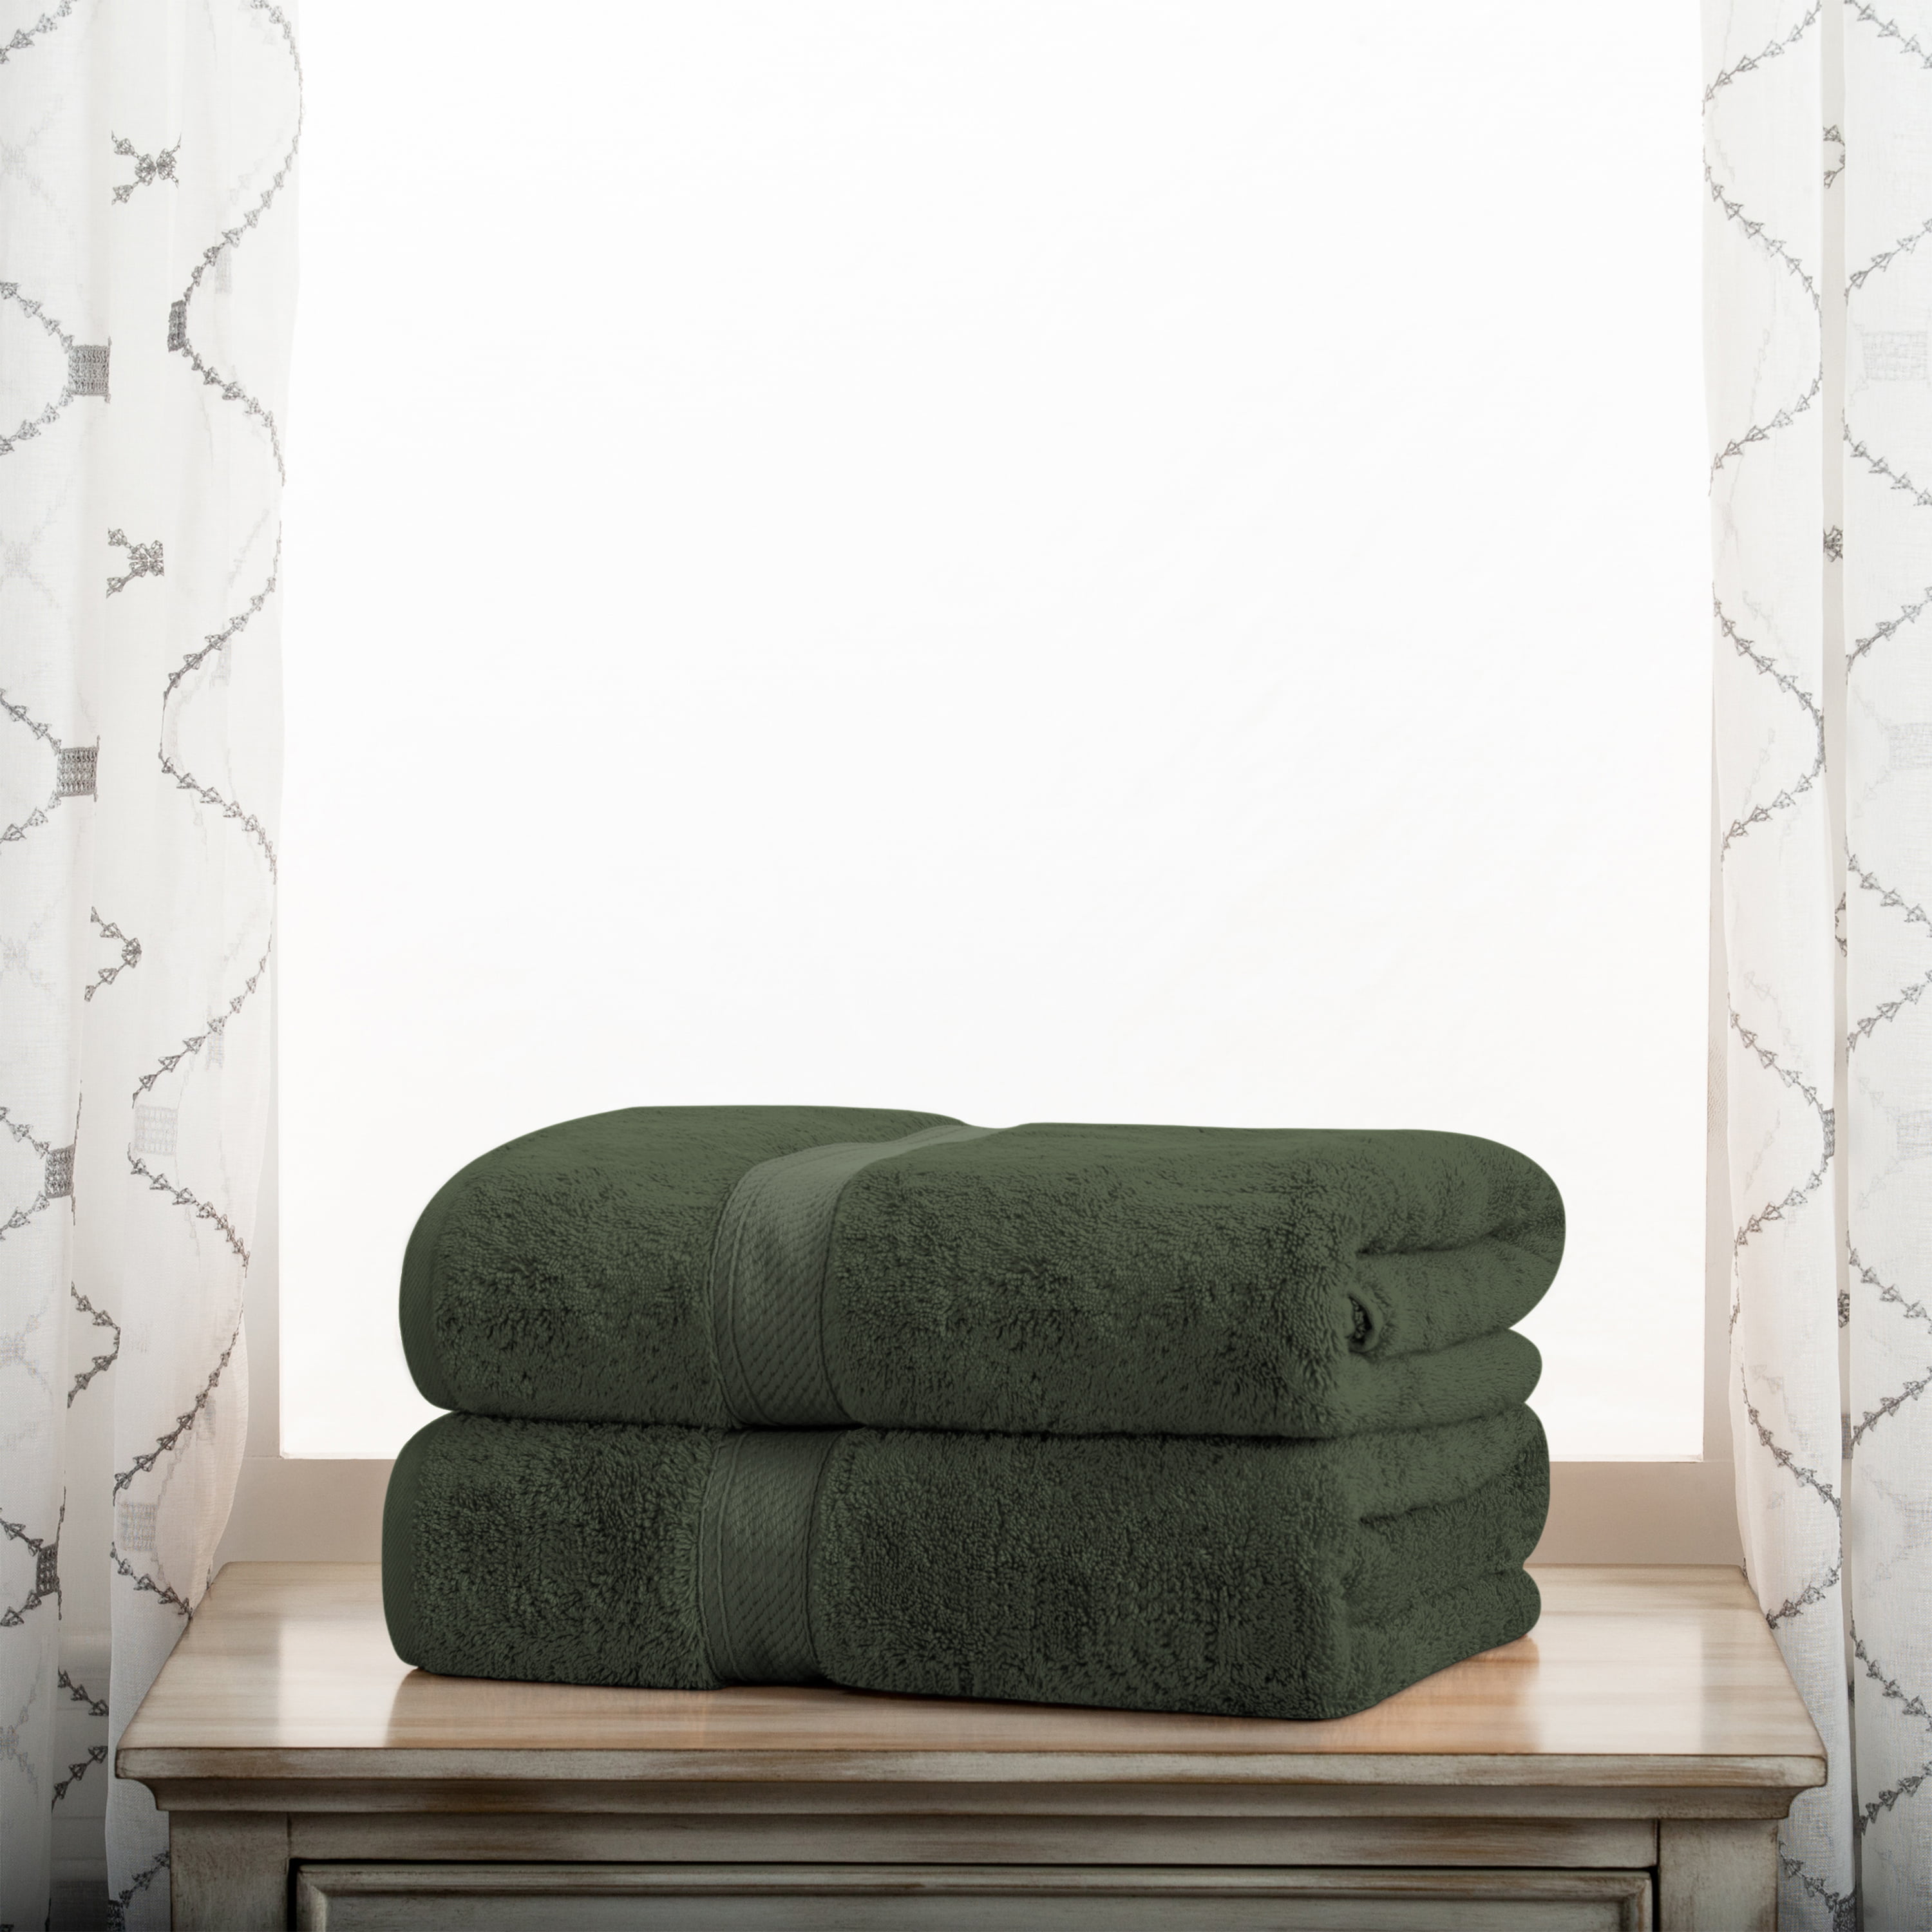 4 Washcloths Face Towel Biltmore Luxury Bathroom Green Ivory 13x13 M-L  Christmas